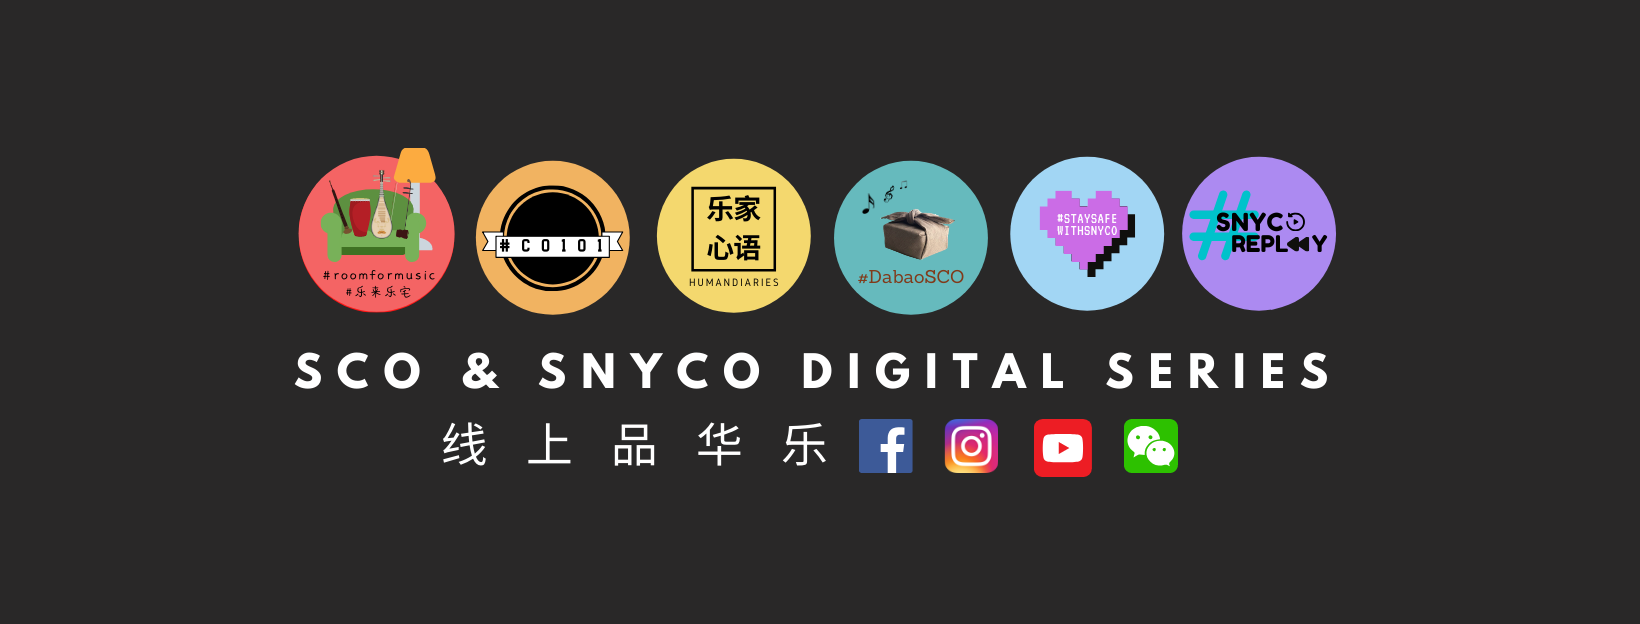 SCO Digital Series banner